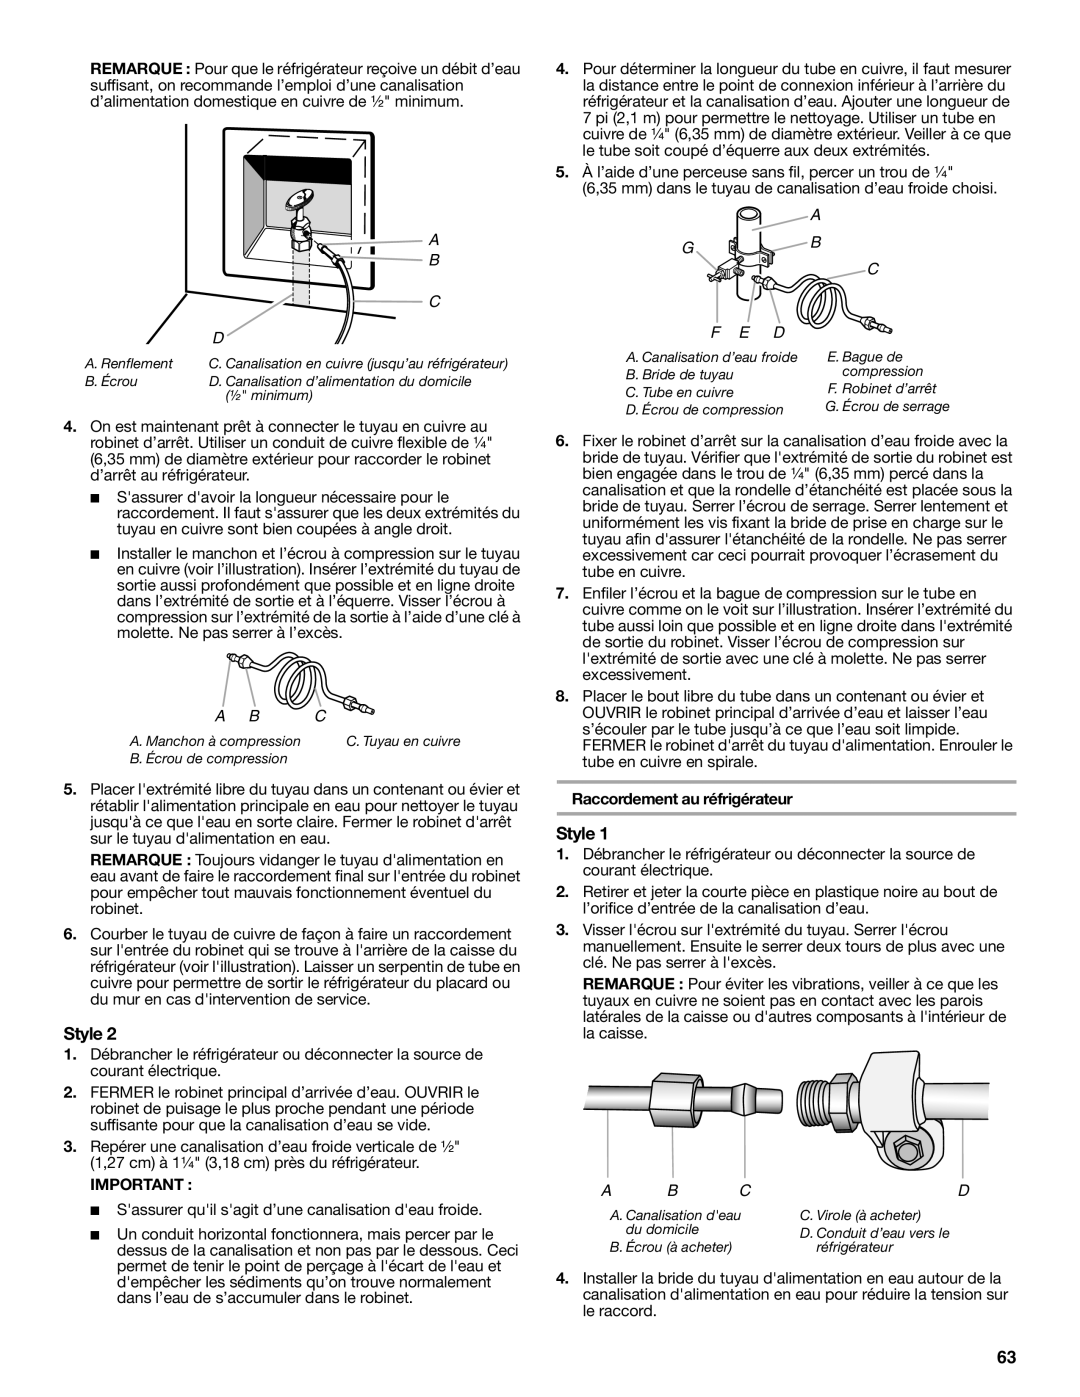 Whirlpool W10632883A installation instructions Style, F E D, Raccordement au réfrigérateur 